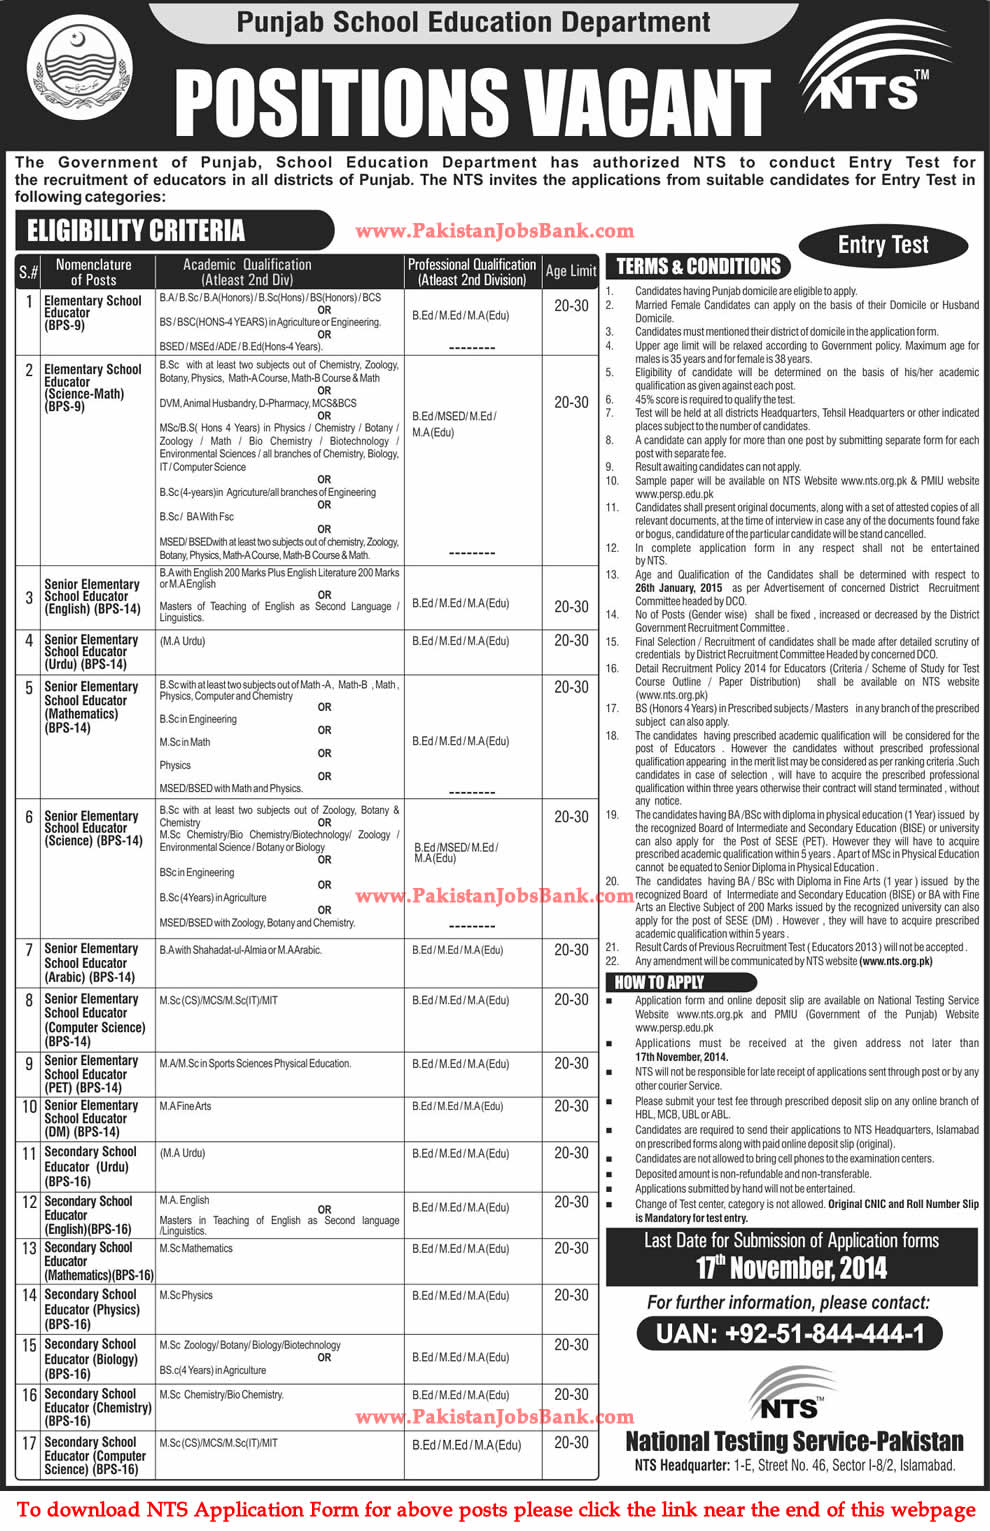 Punjab School Education Department Jobs 2014 November NTS Application Form Download